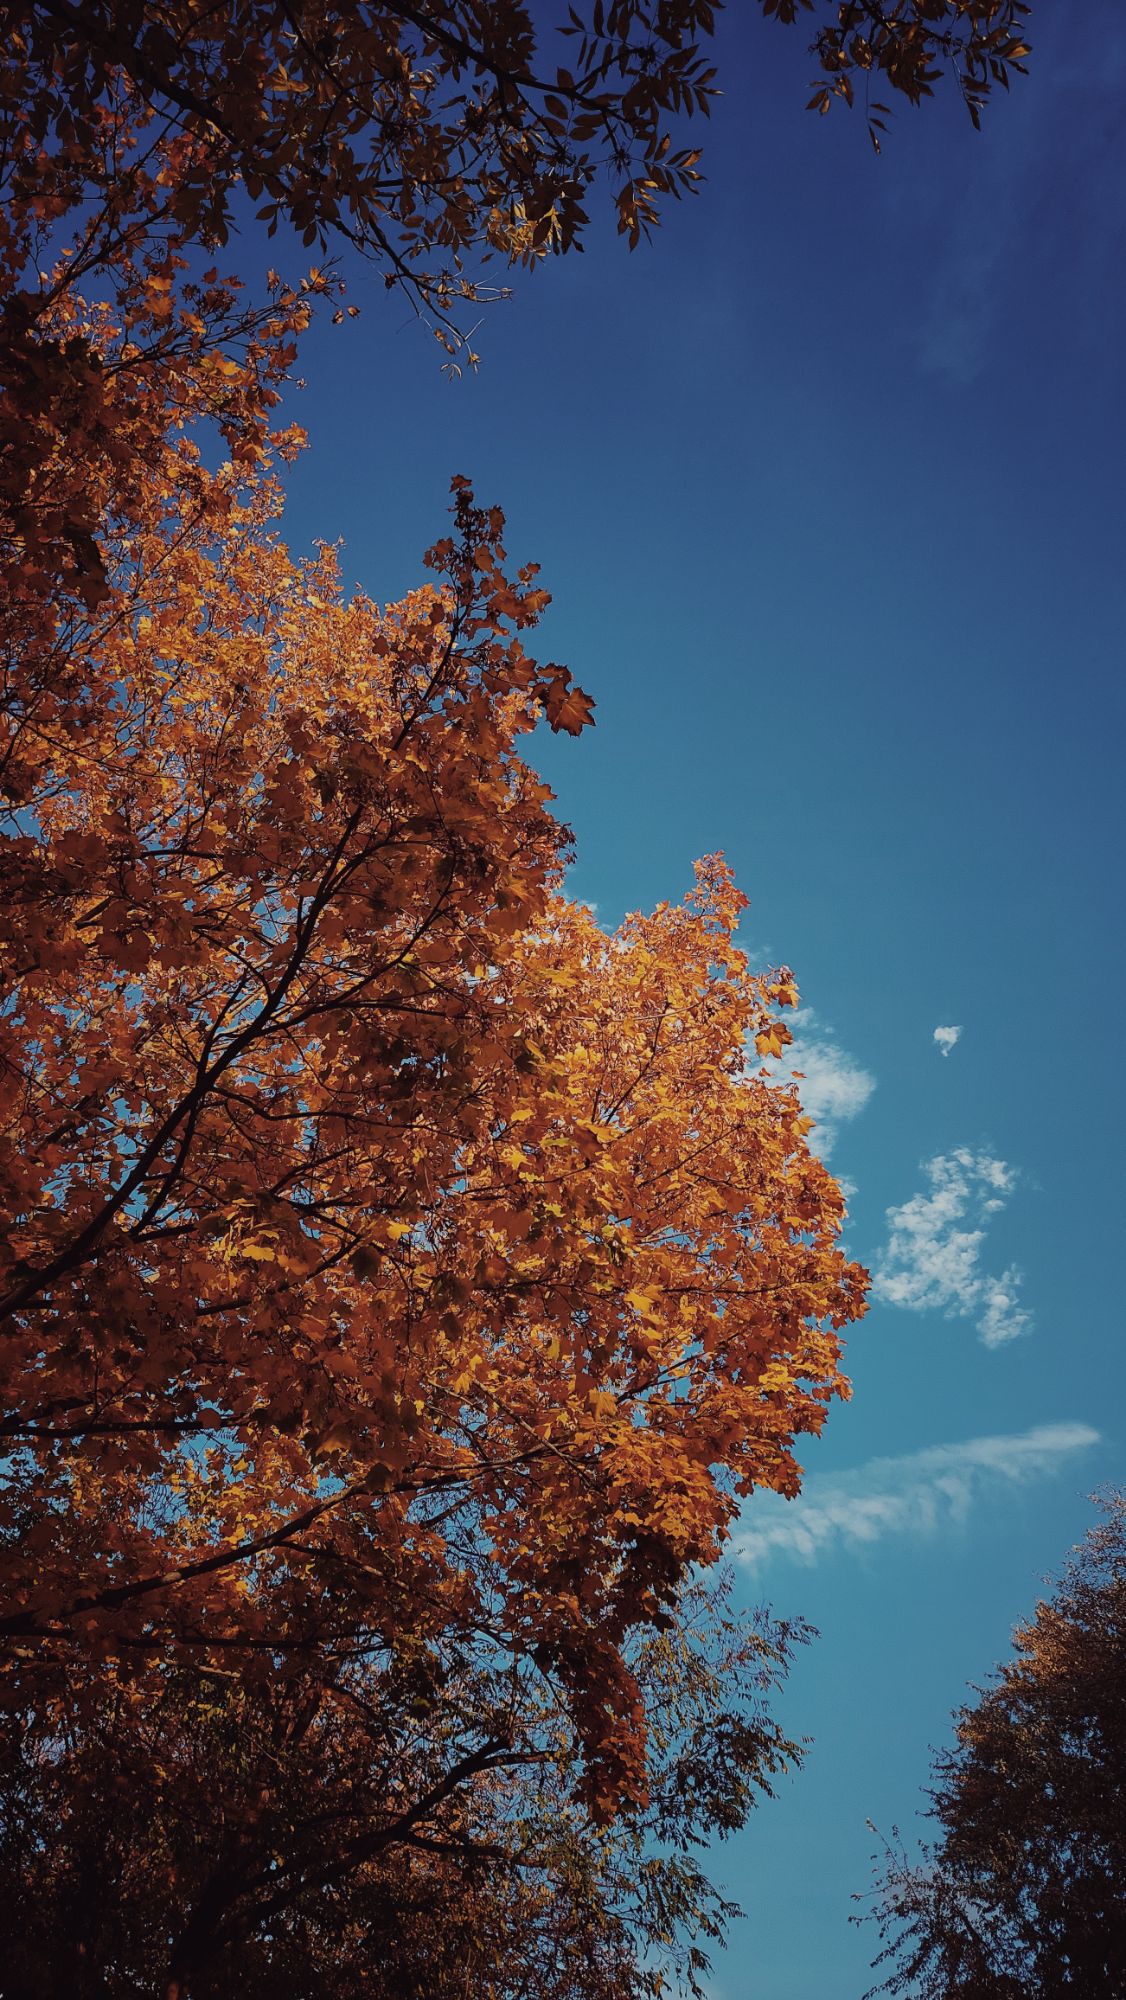 Autumn coloured trees and blue sky.